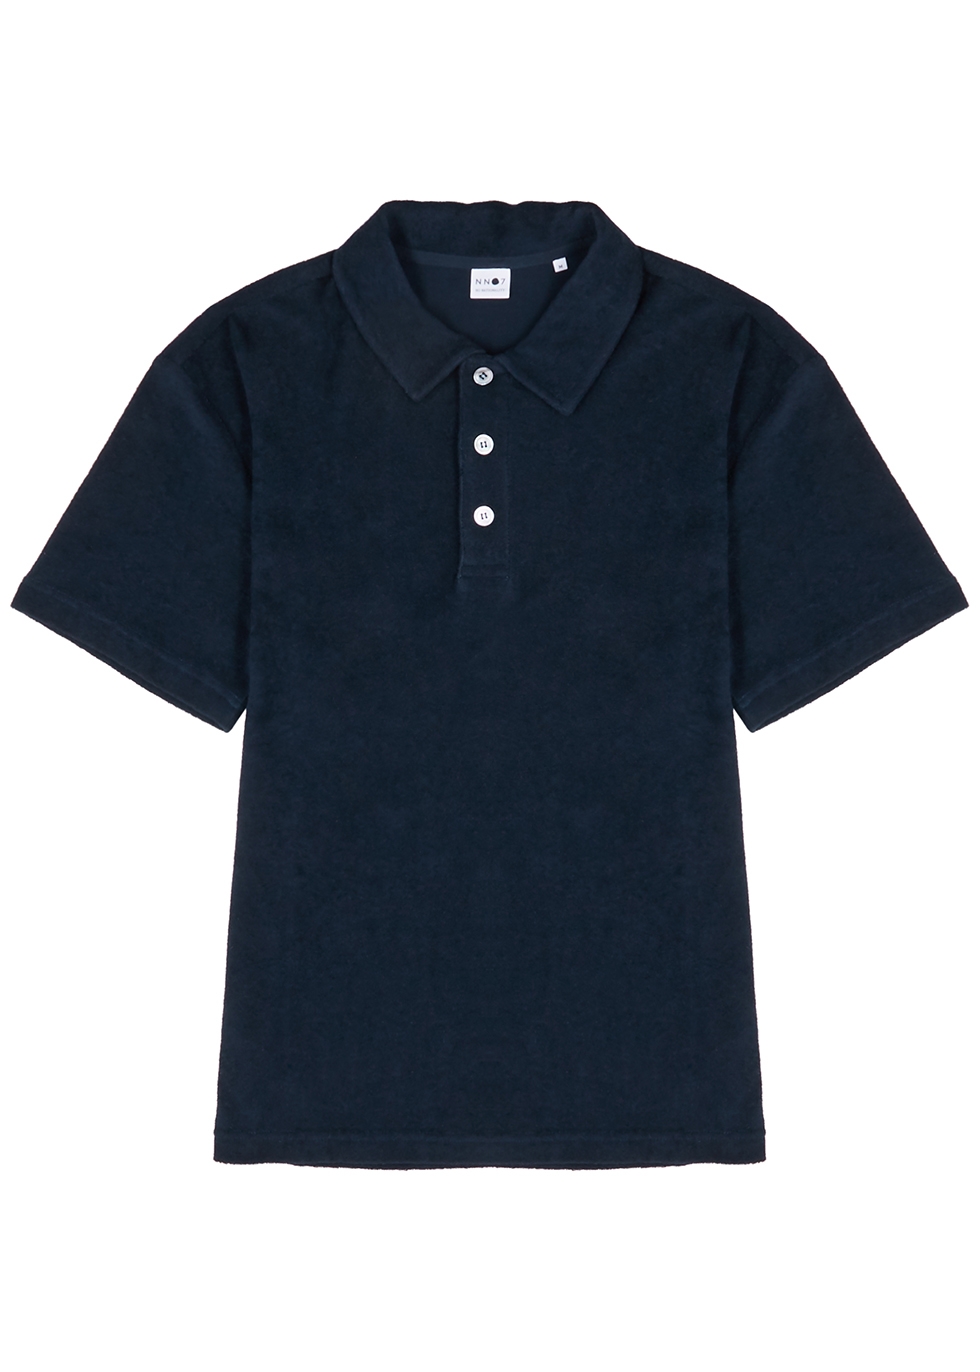 Joey navy cotton-terry polo shirt